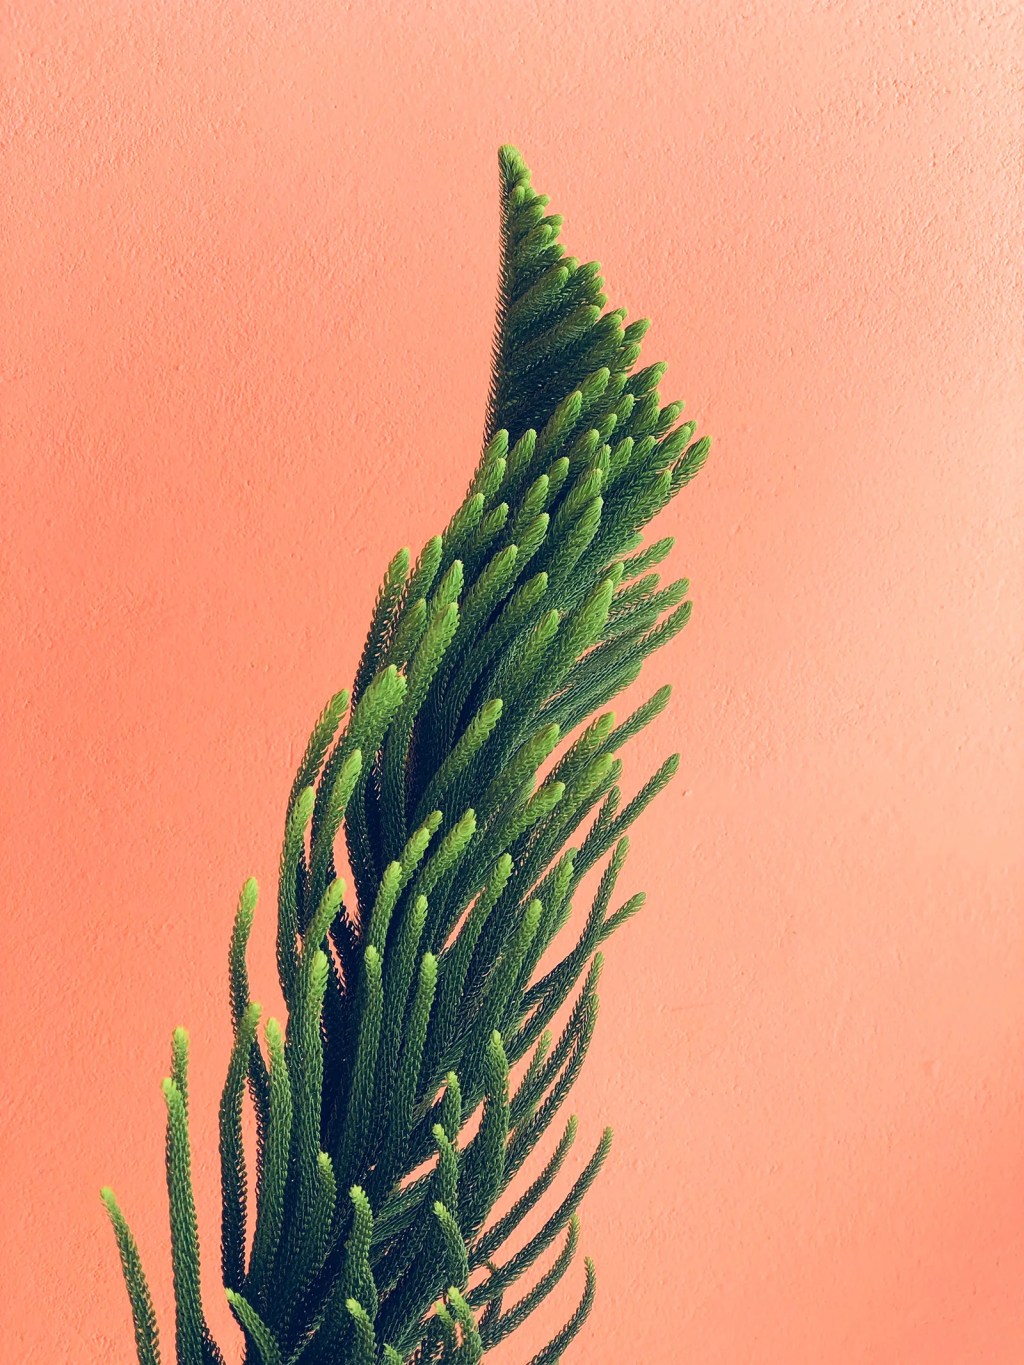 photo of pine needle